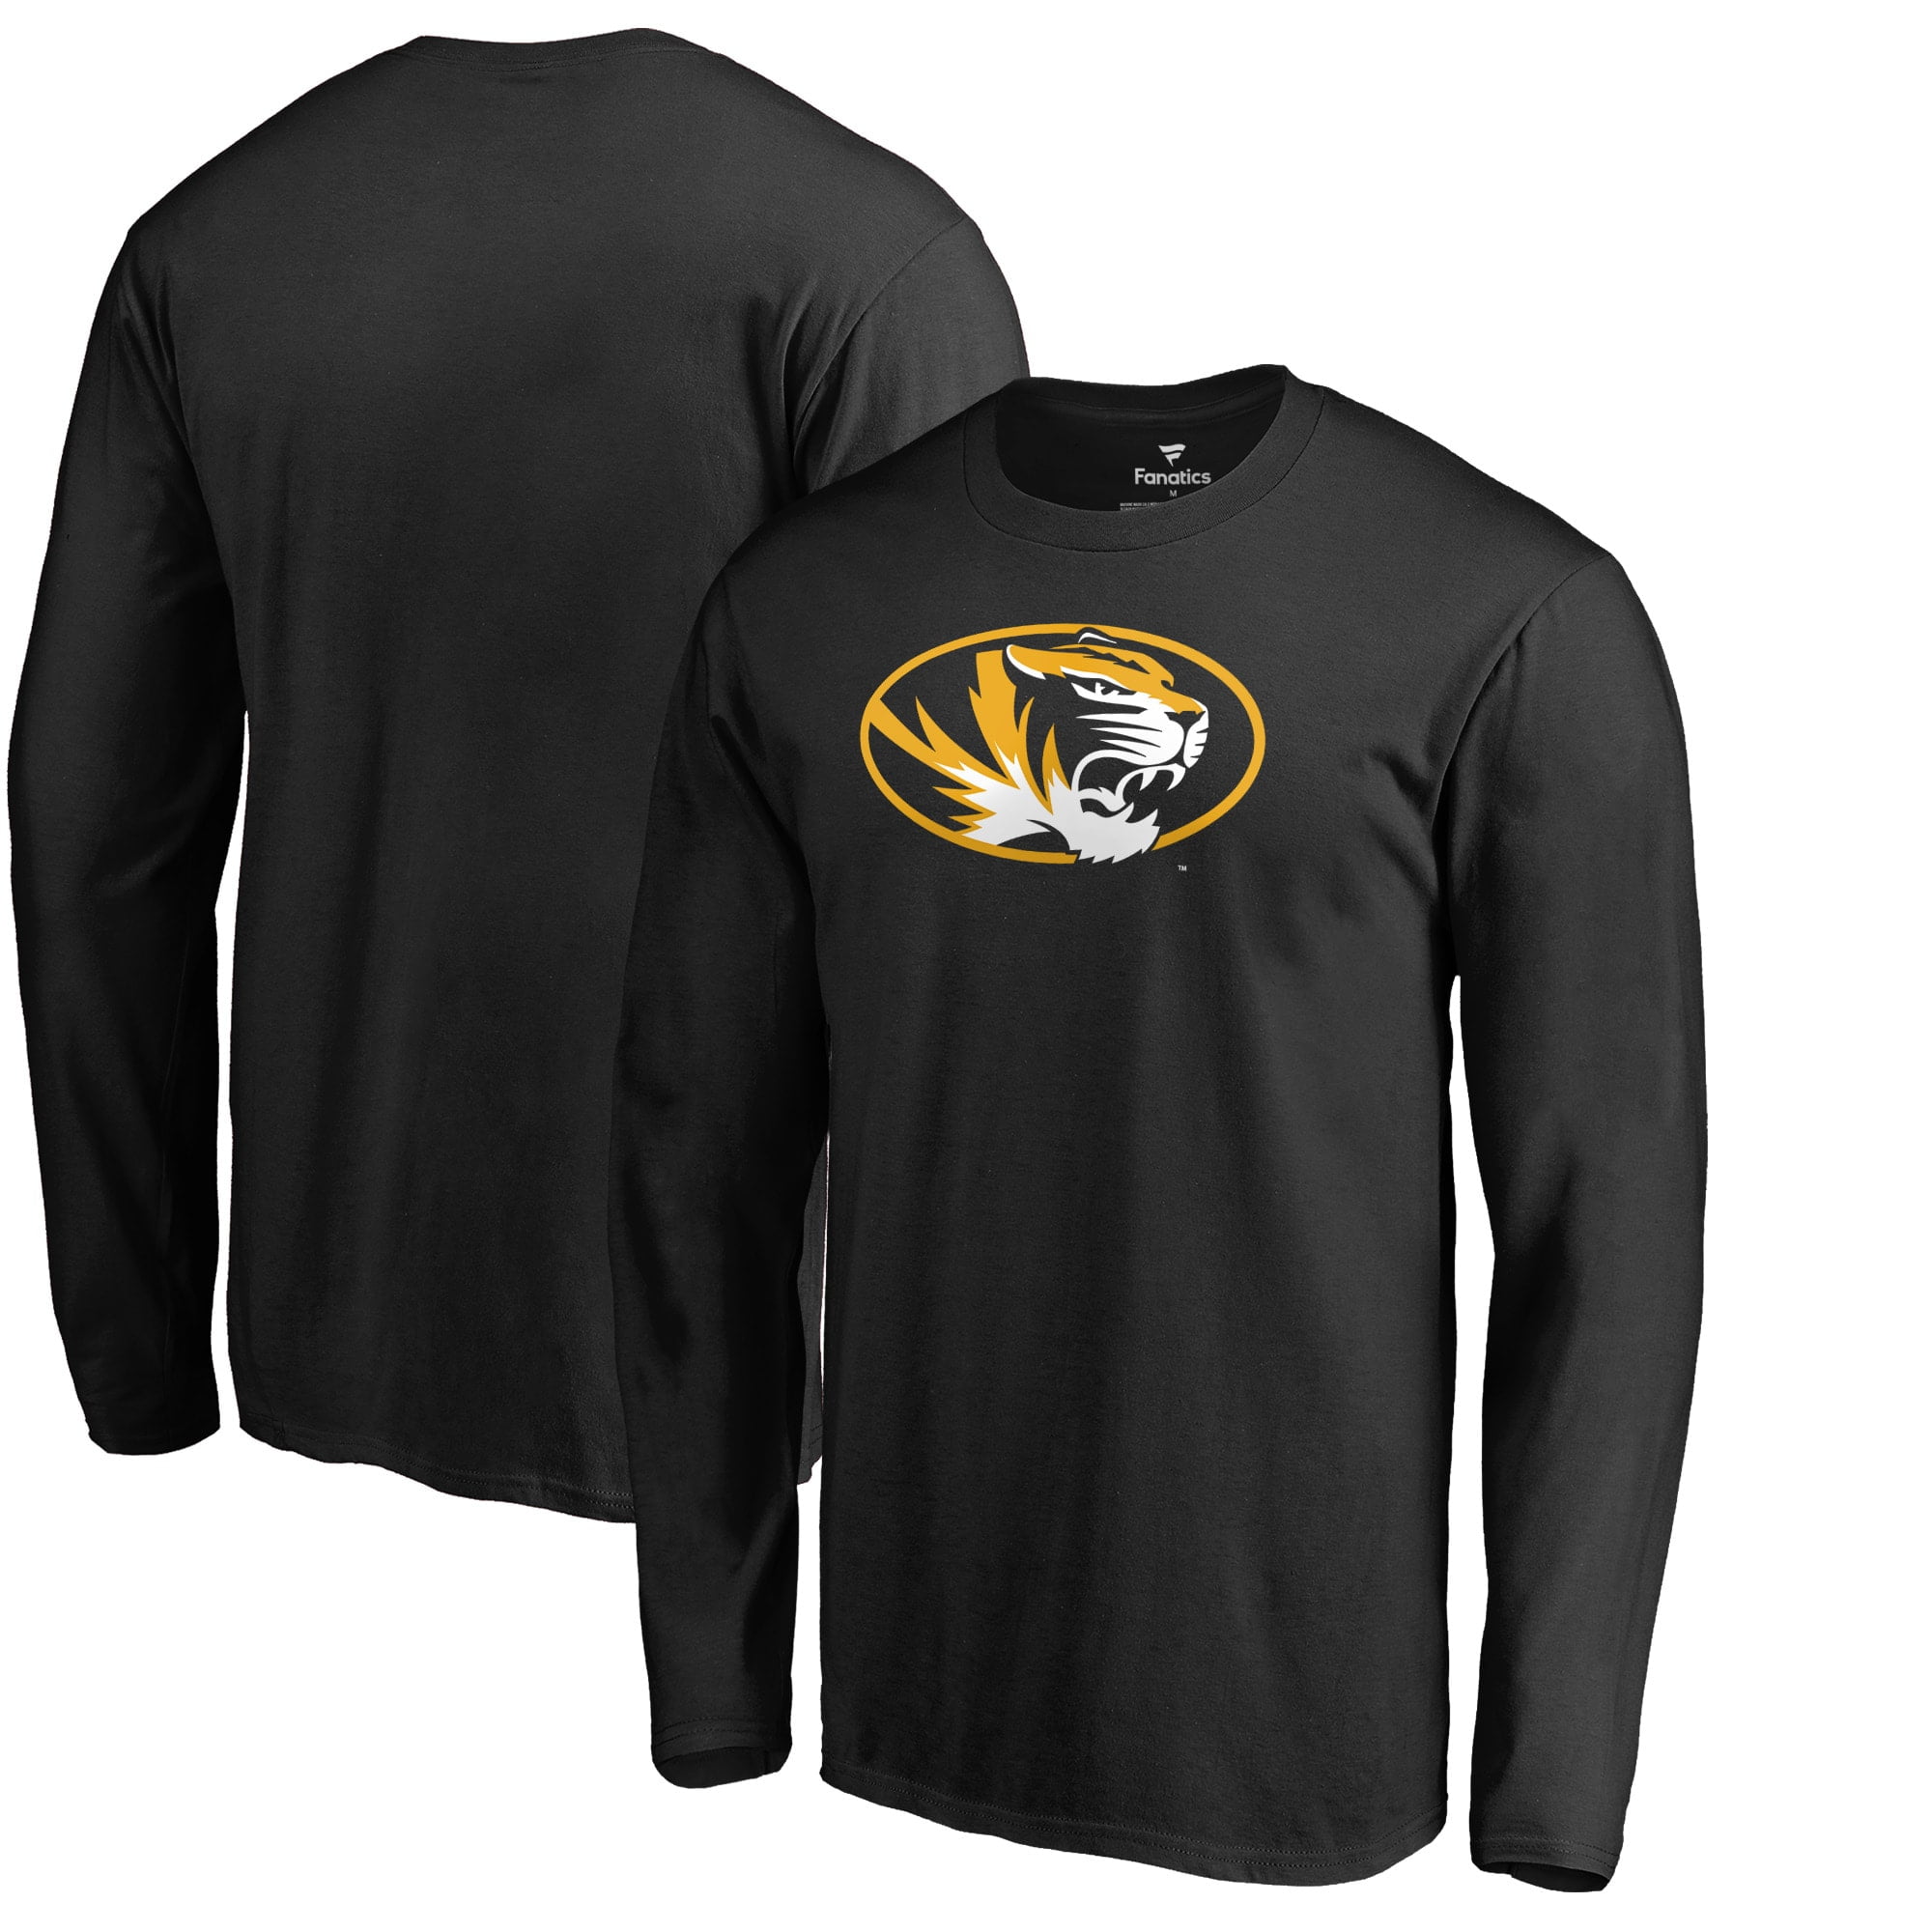 Missouri Tigers Fanatics Branded Primary Team Logo Long Sleeve T 